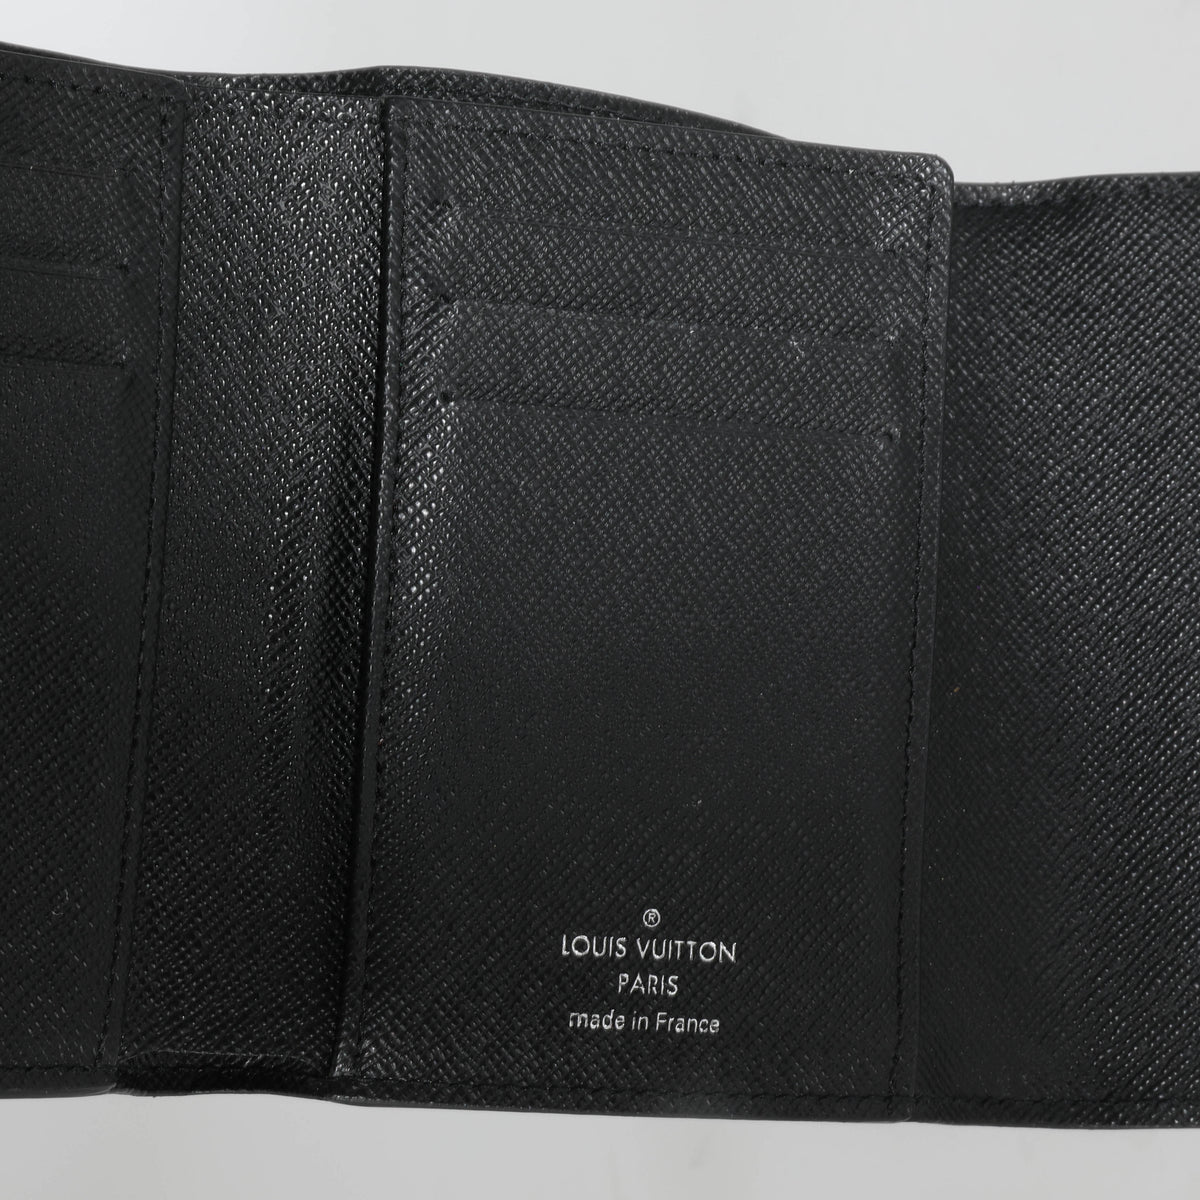 LOUIS VUITTON Epi Twist Compact Wallet Black 1295495